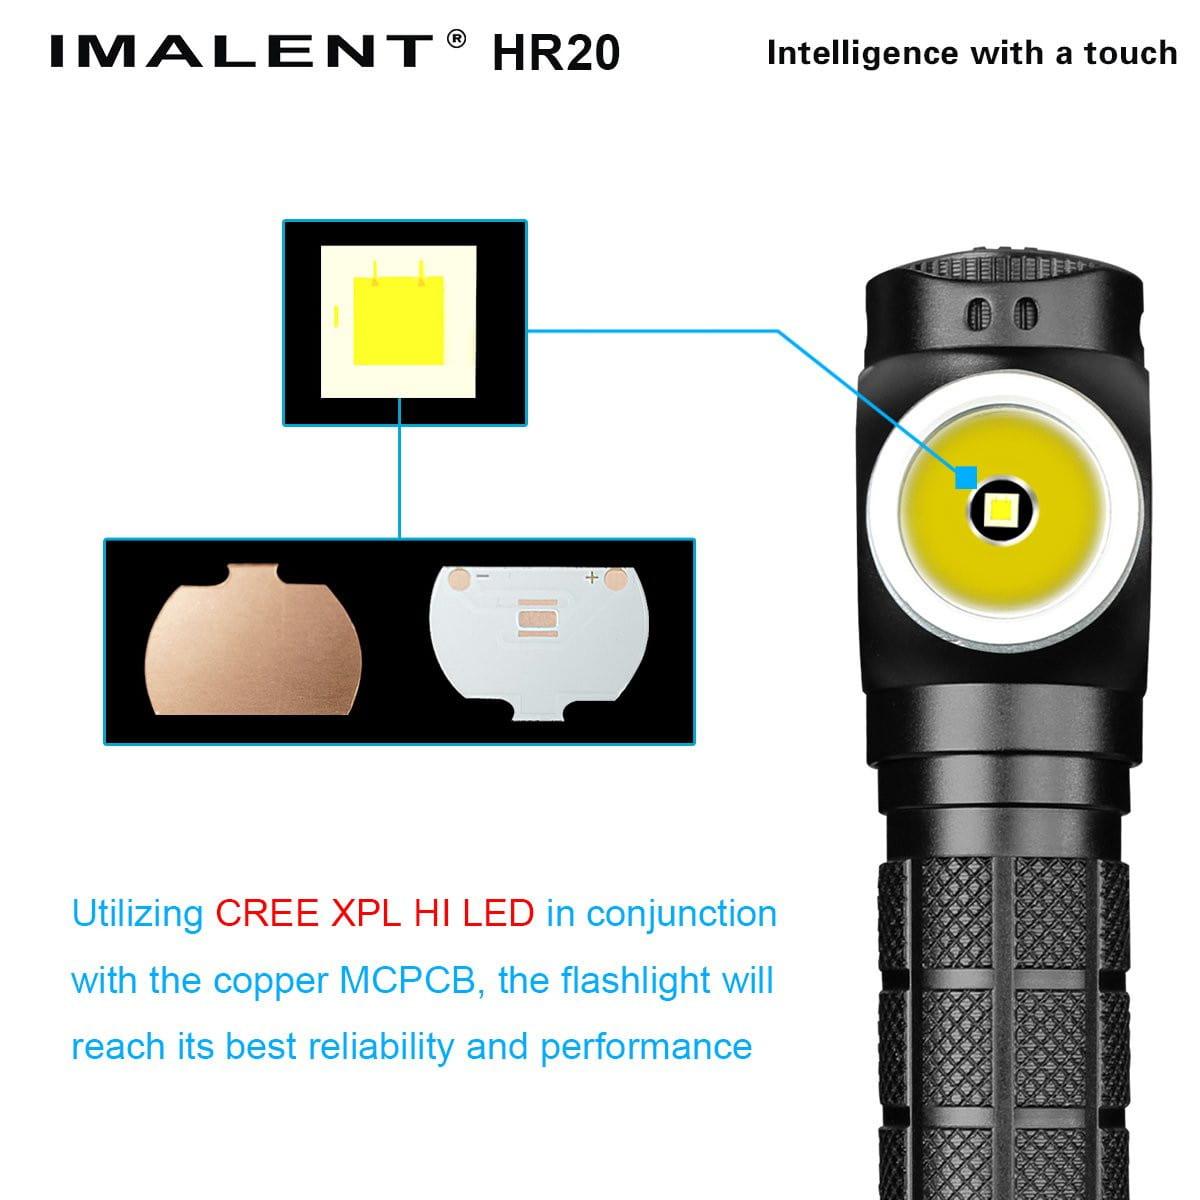 imalentstore - HR20 LED Headlamp - imalentstore - Headlamps